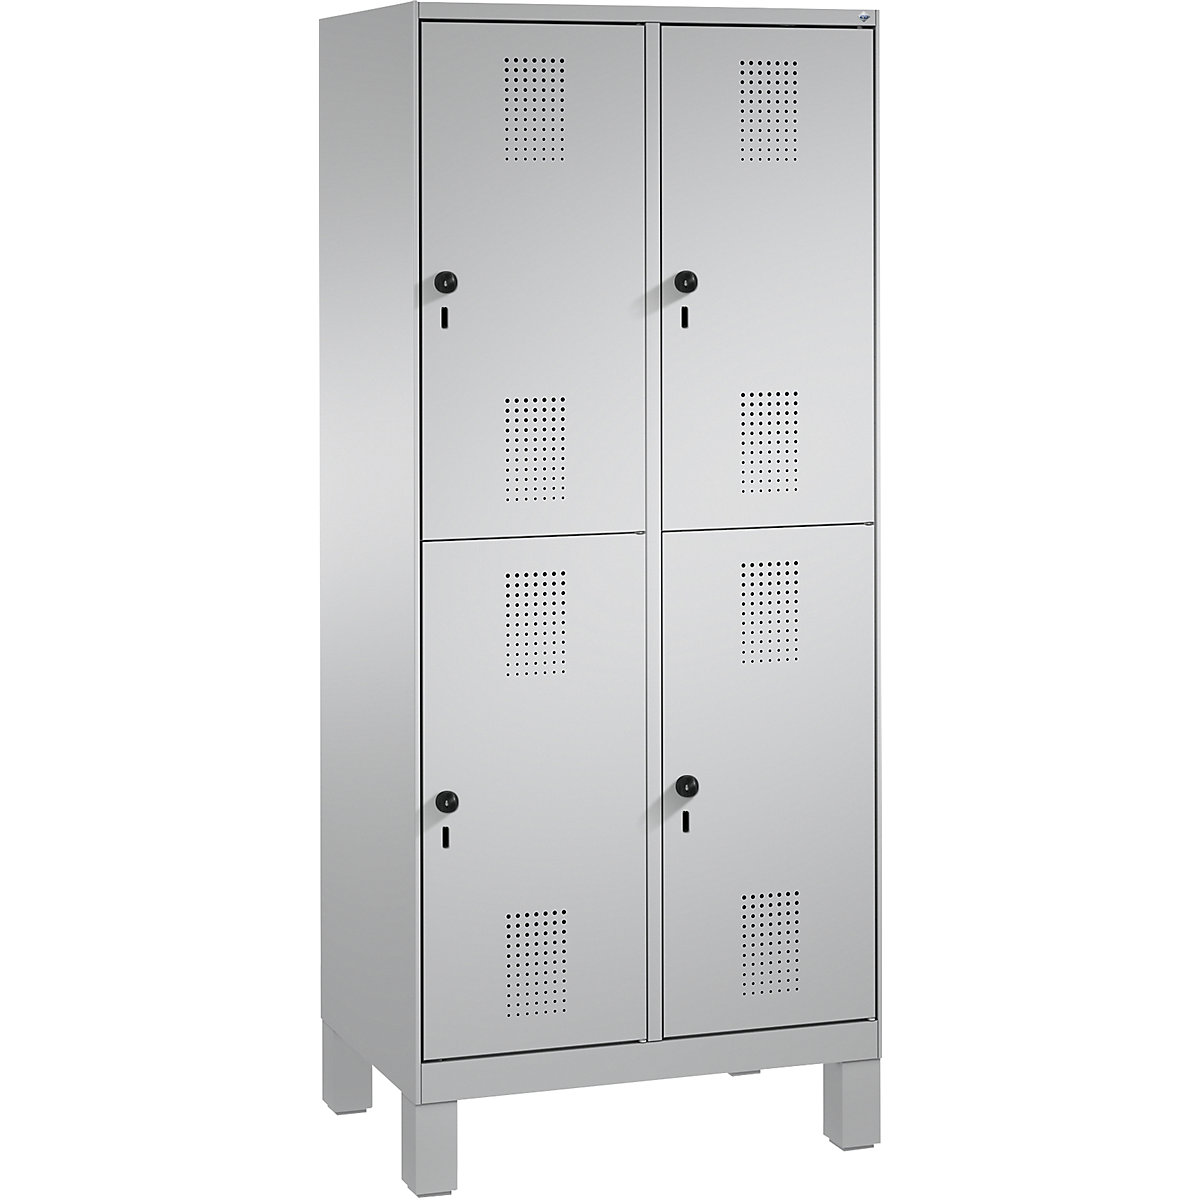 EVOLO cloakroom locker, double tier, with feet – C+P, 2 compartments, 2 shelf compartments each, compartment width 400 mm, white aluminium / white aluminium-8